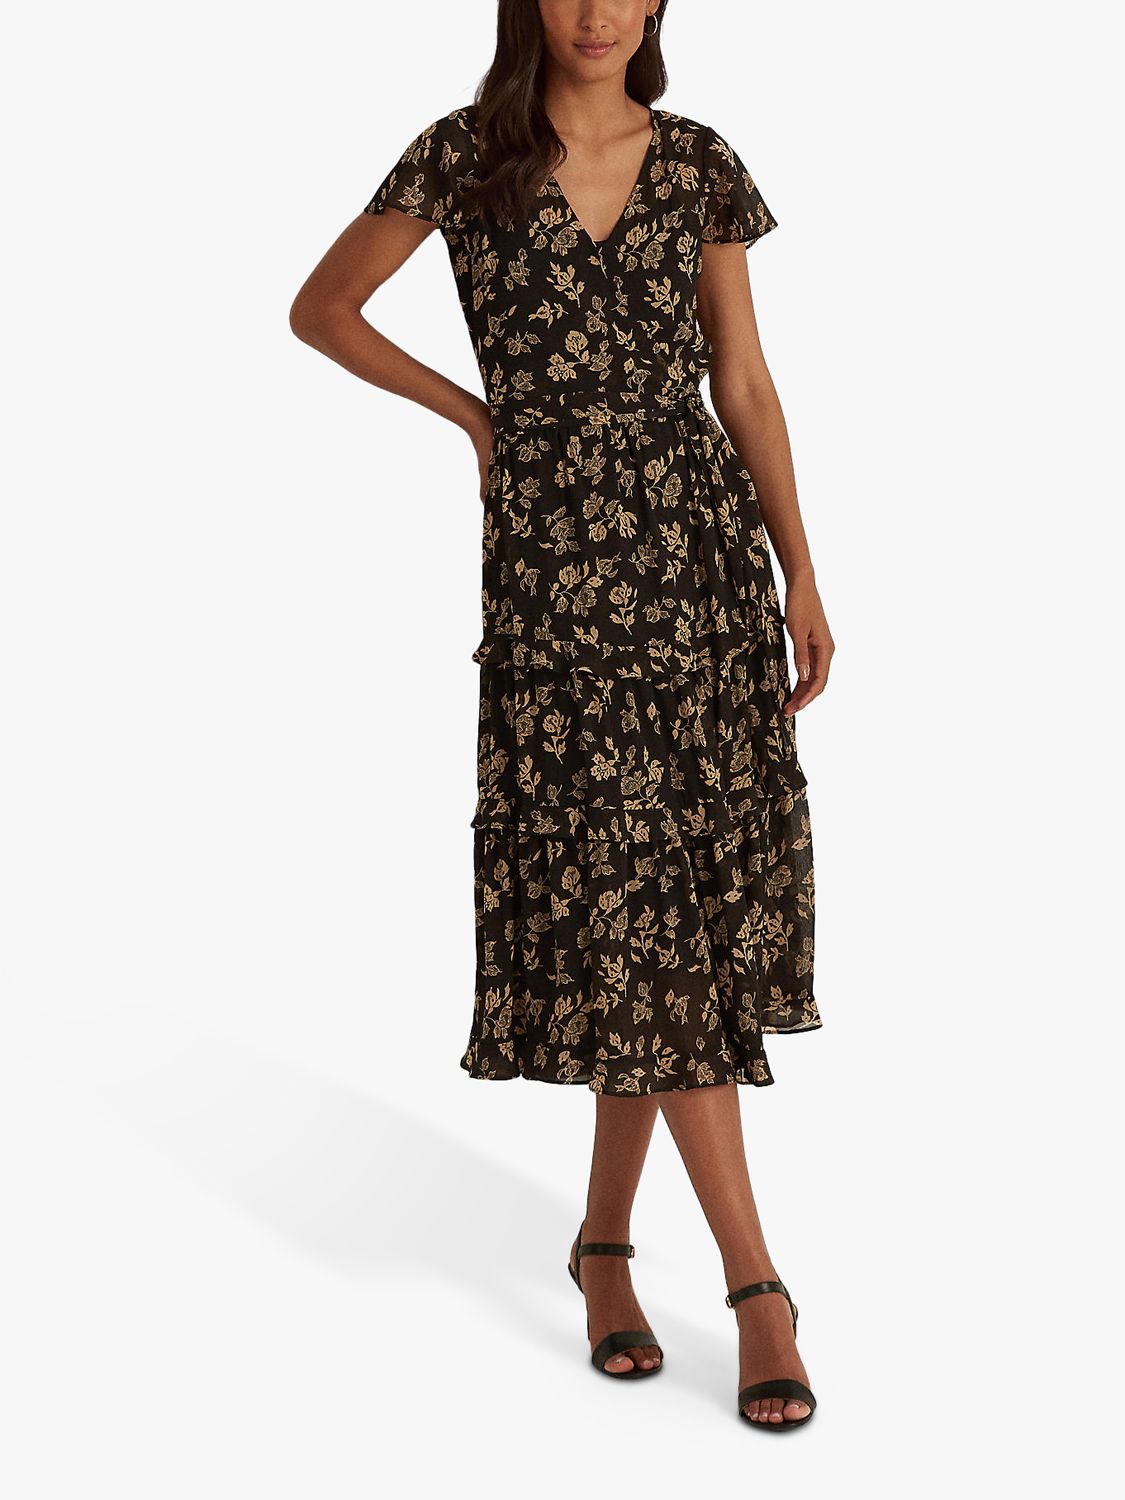 Ralph Lauren Dijenova Floral Print Dress, Black/Cream